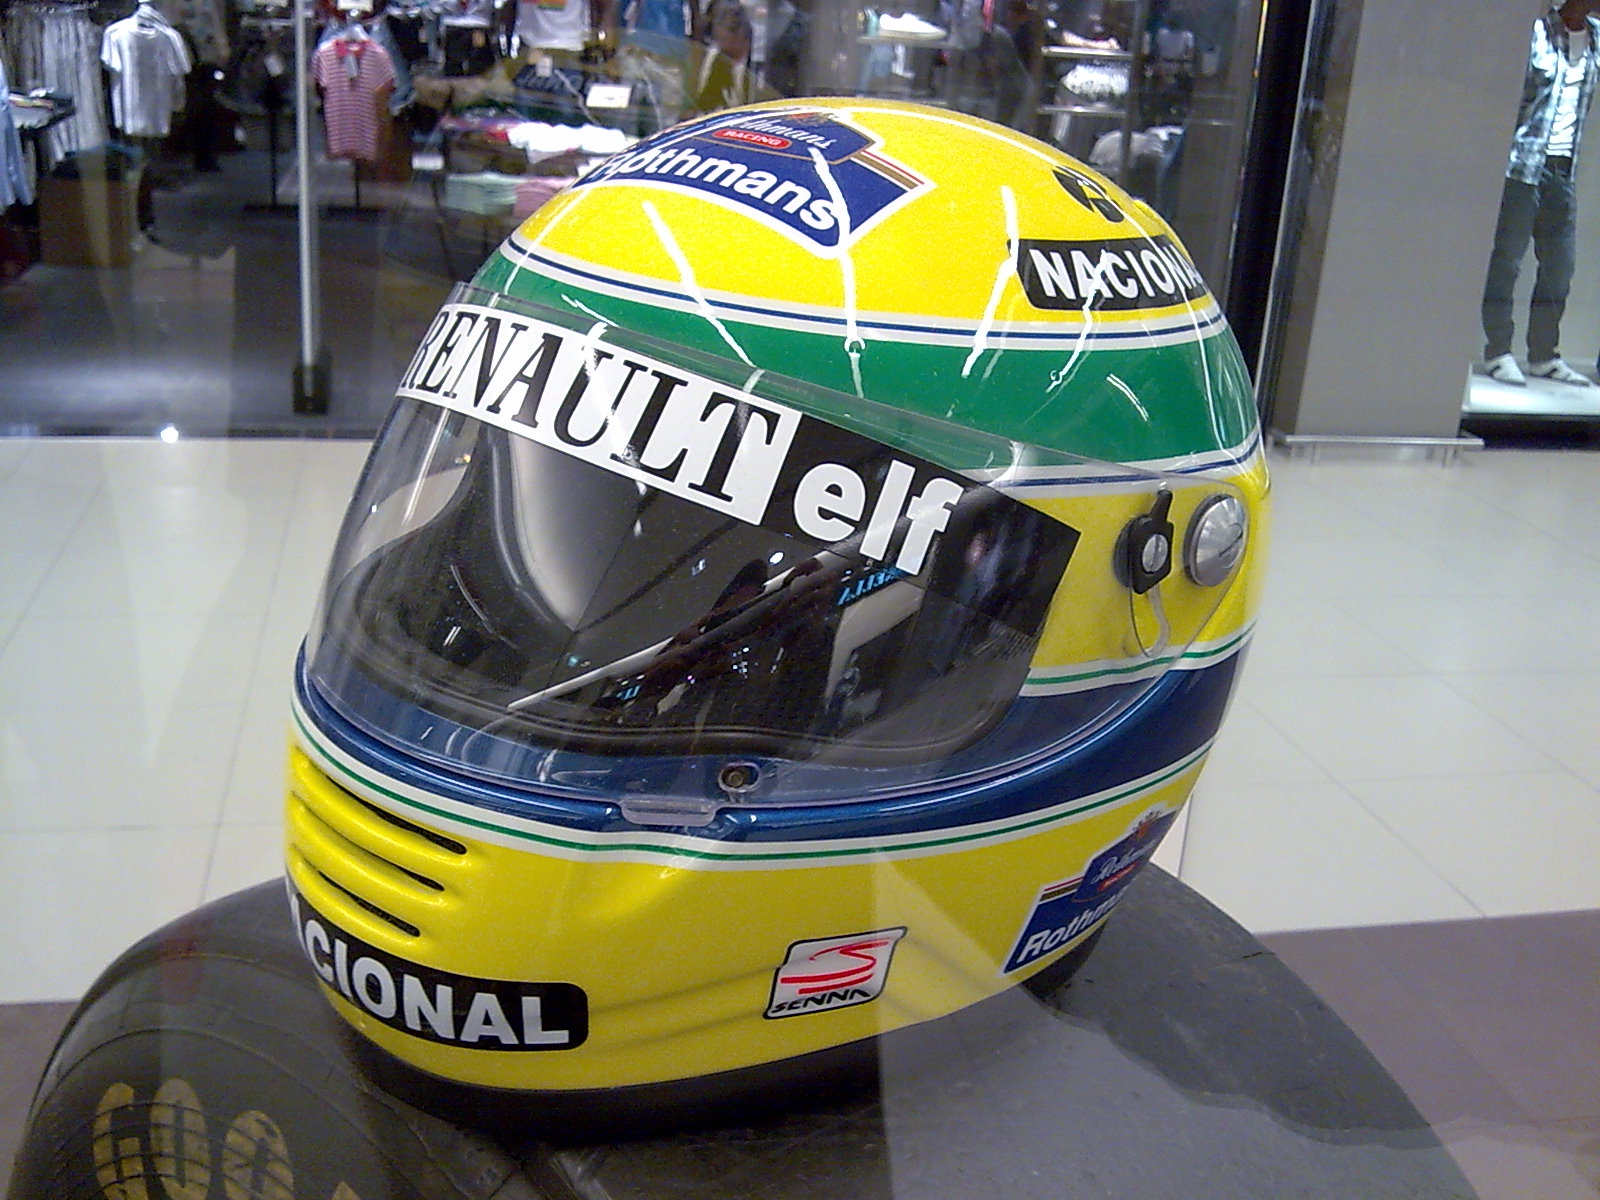 Senna's Helmet by JohnnySlowhand on DeviantArt